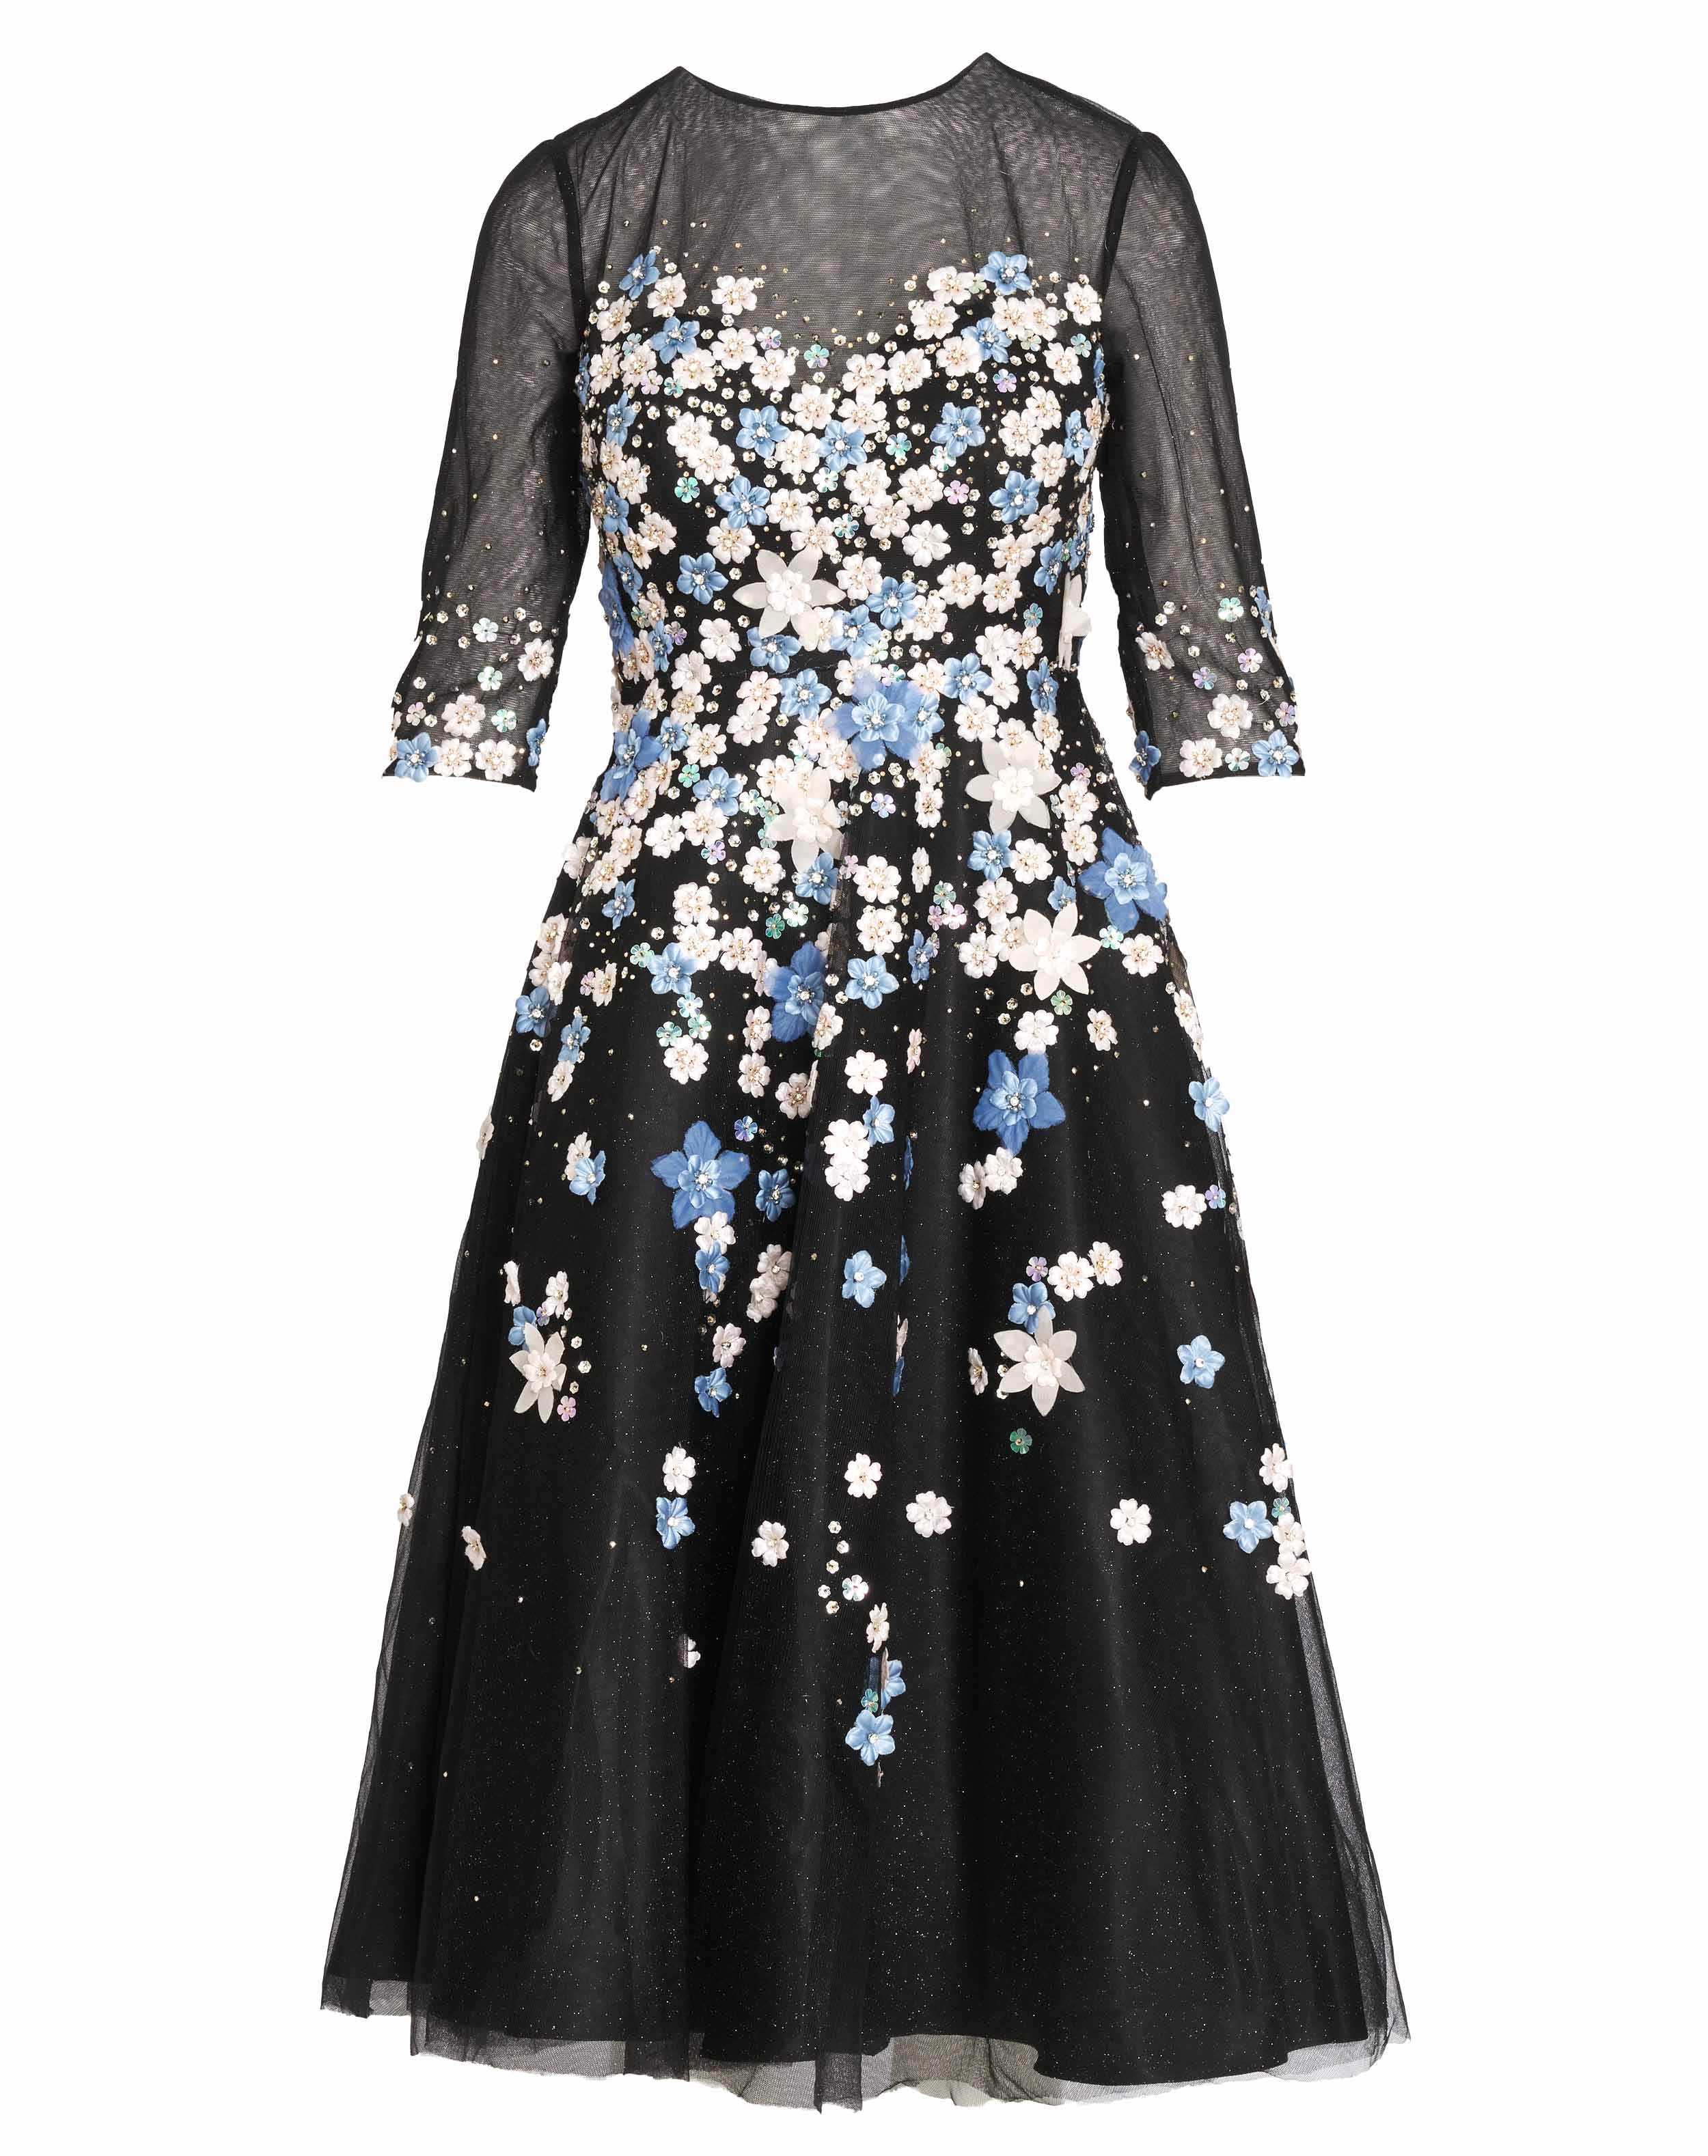 Floral Embroidered A-Line Tea-Length Cocktail Dress